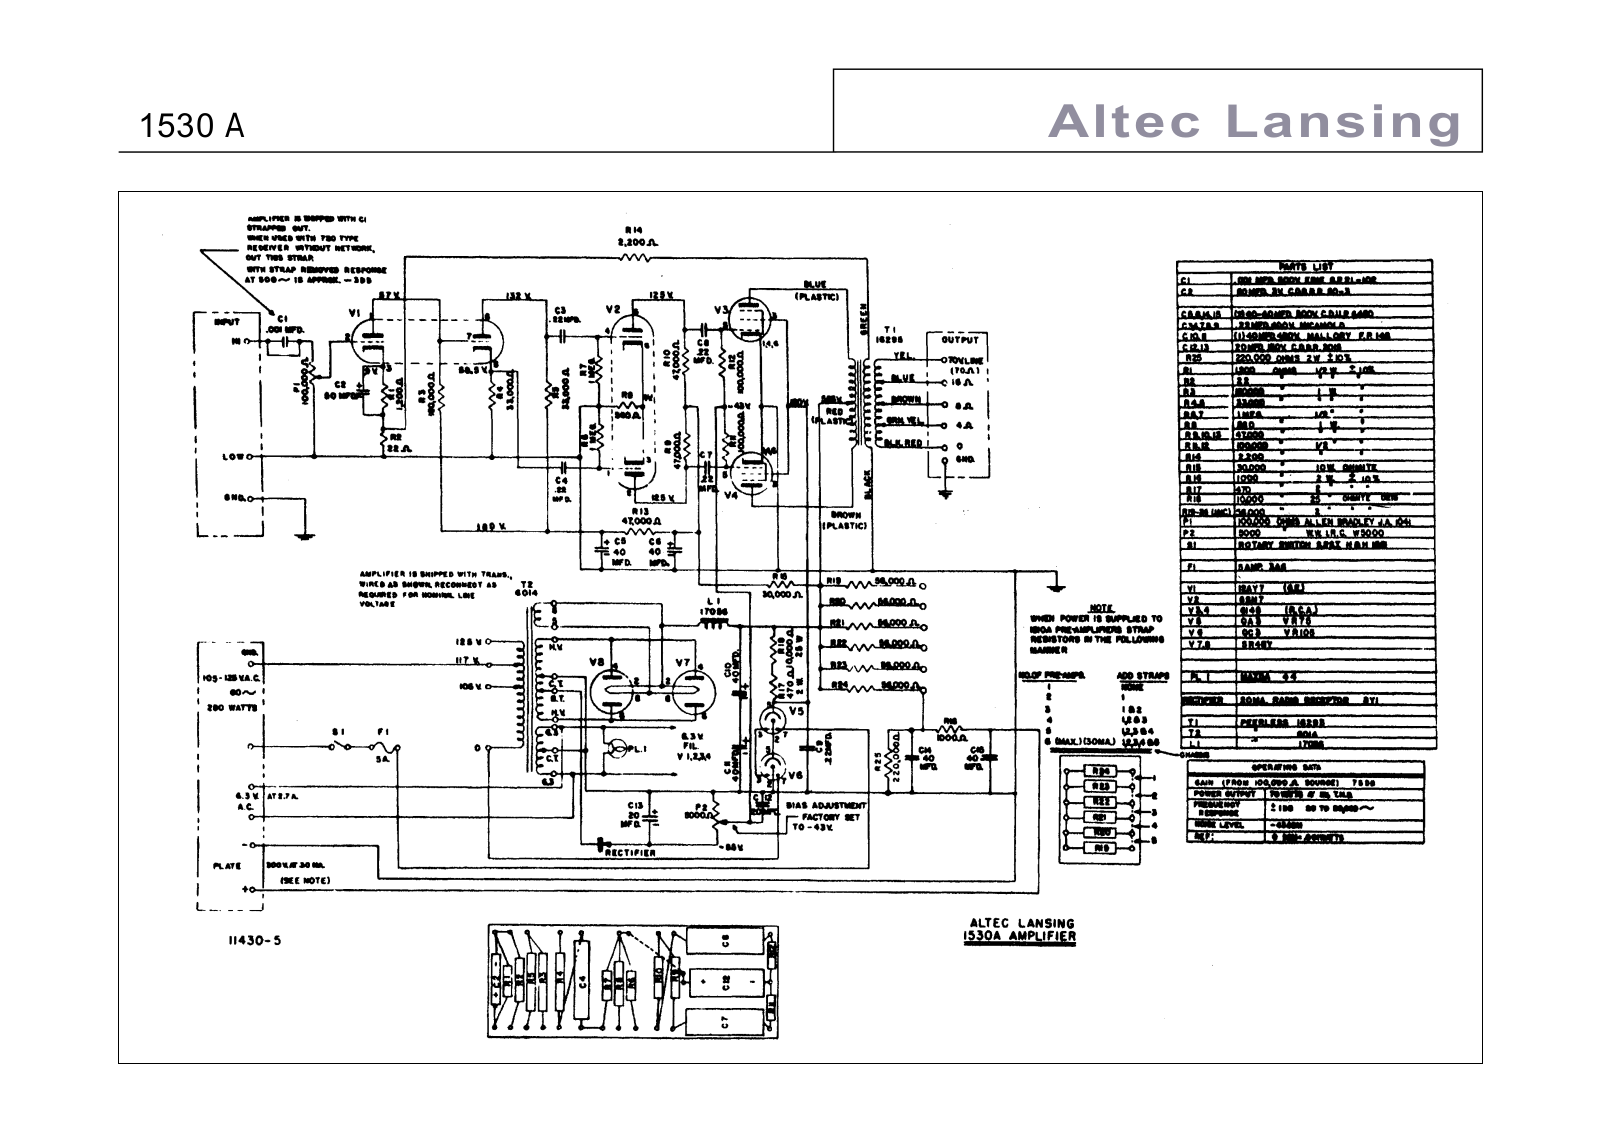 Altec Lansing 1530 a schematic